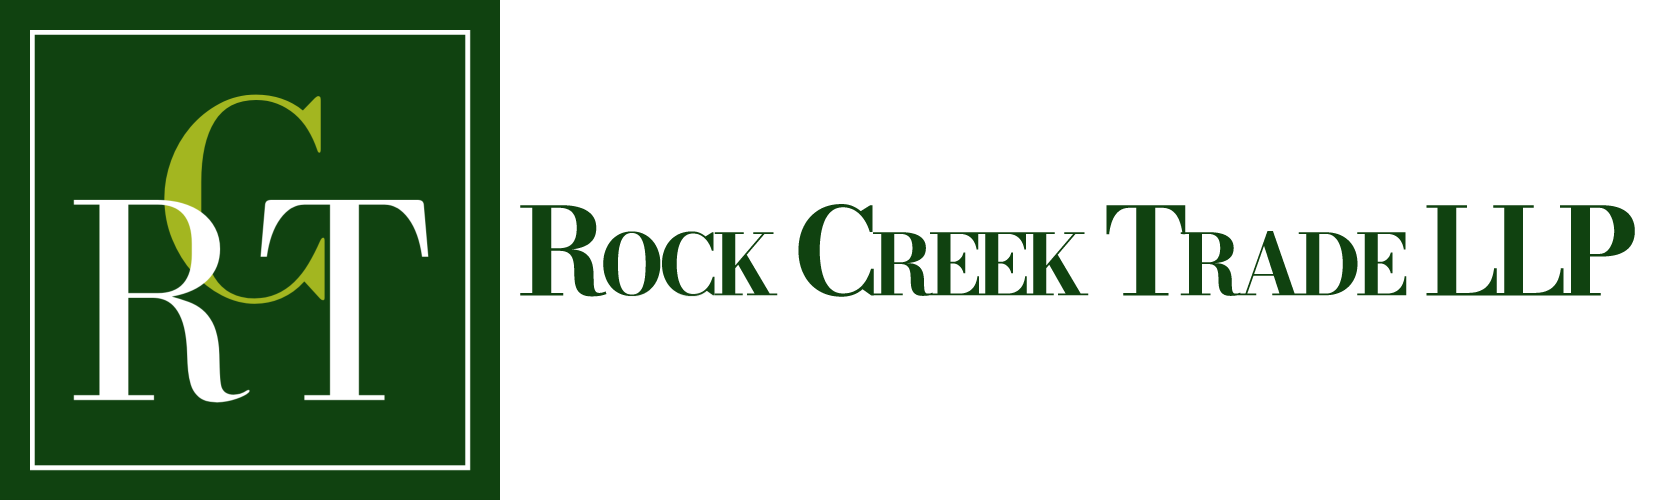 Rock Creek Trade